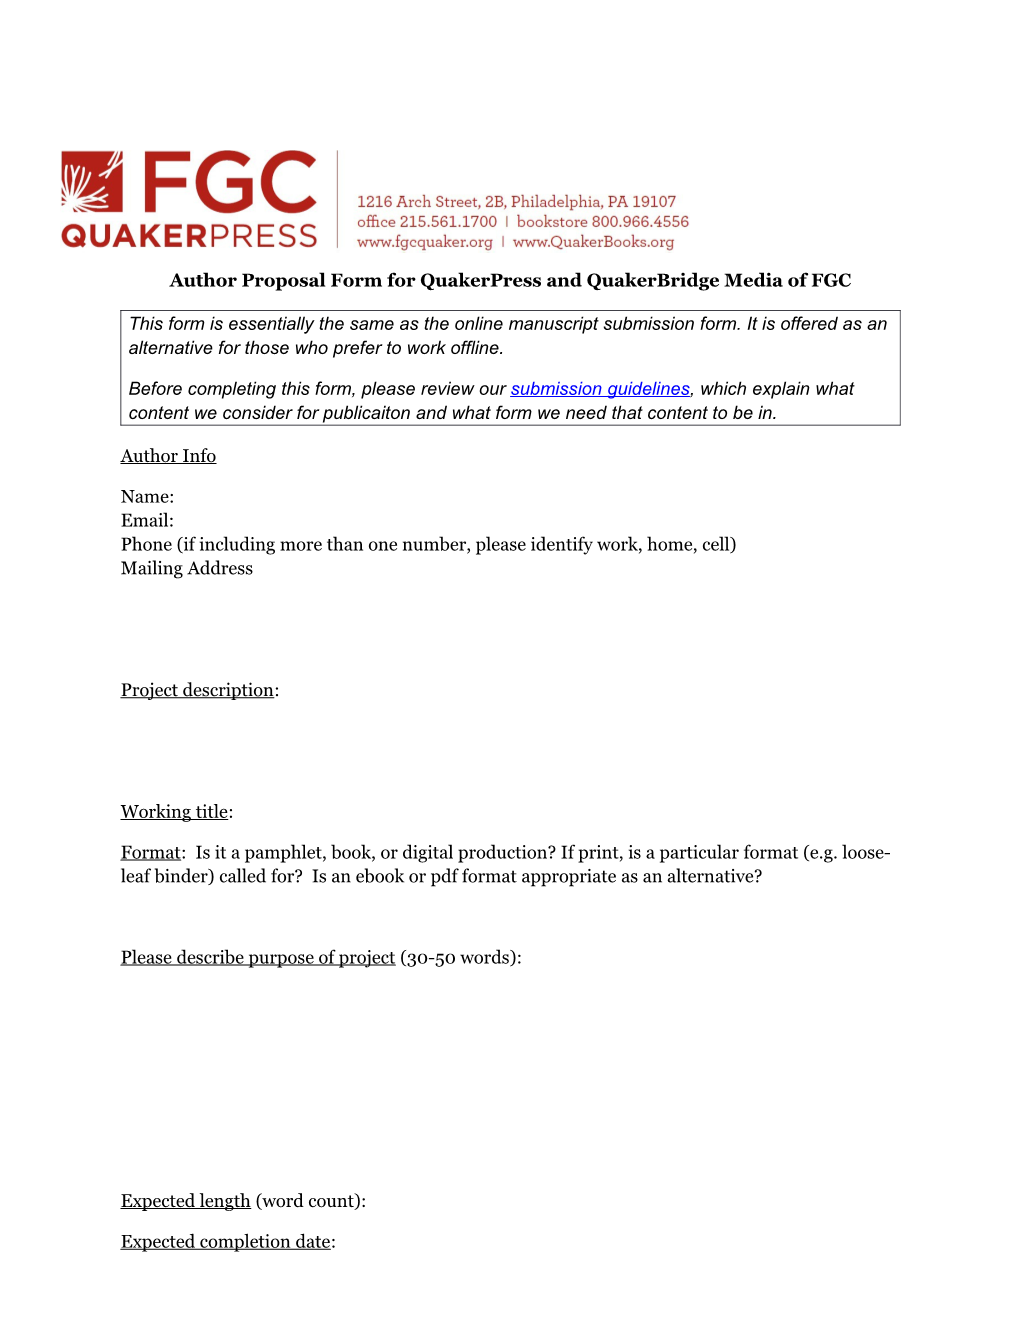 Author Proposal Form for Quakerpress and Quakerbridge Media of FGC